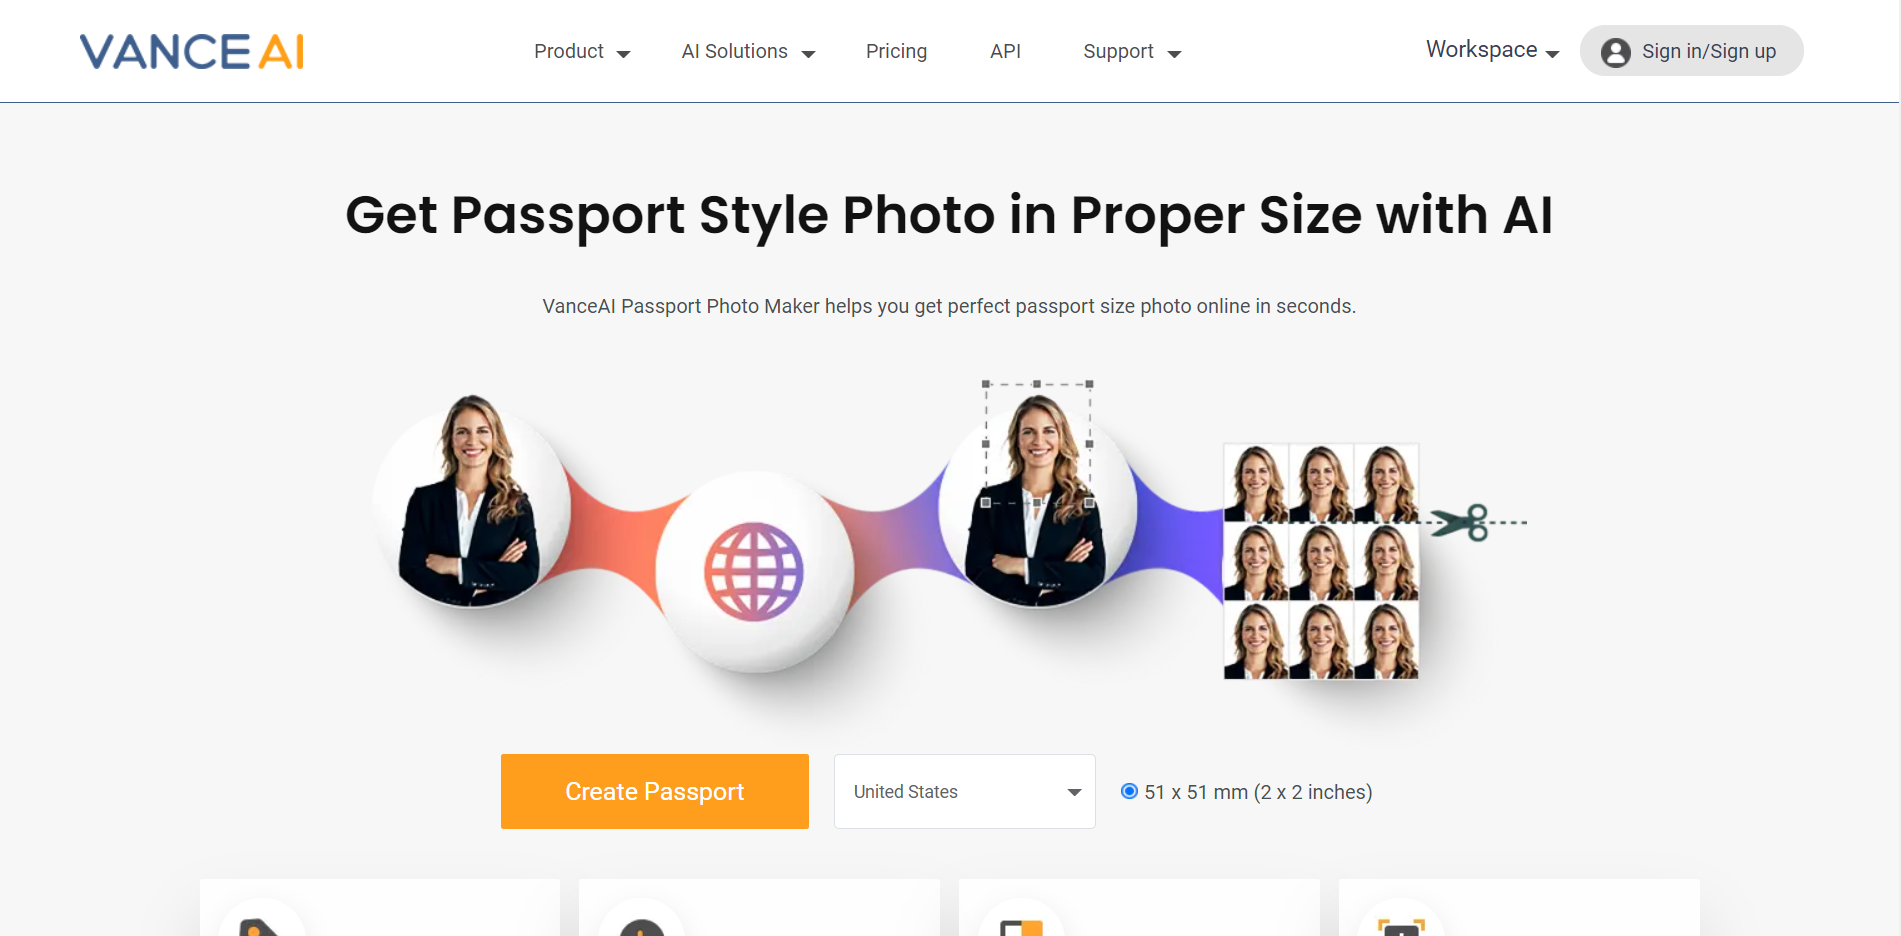 VanceAI Passport Photo Maker to get Passport Size Photo in One Click